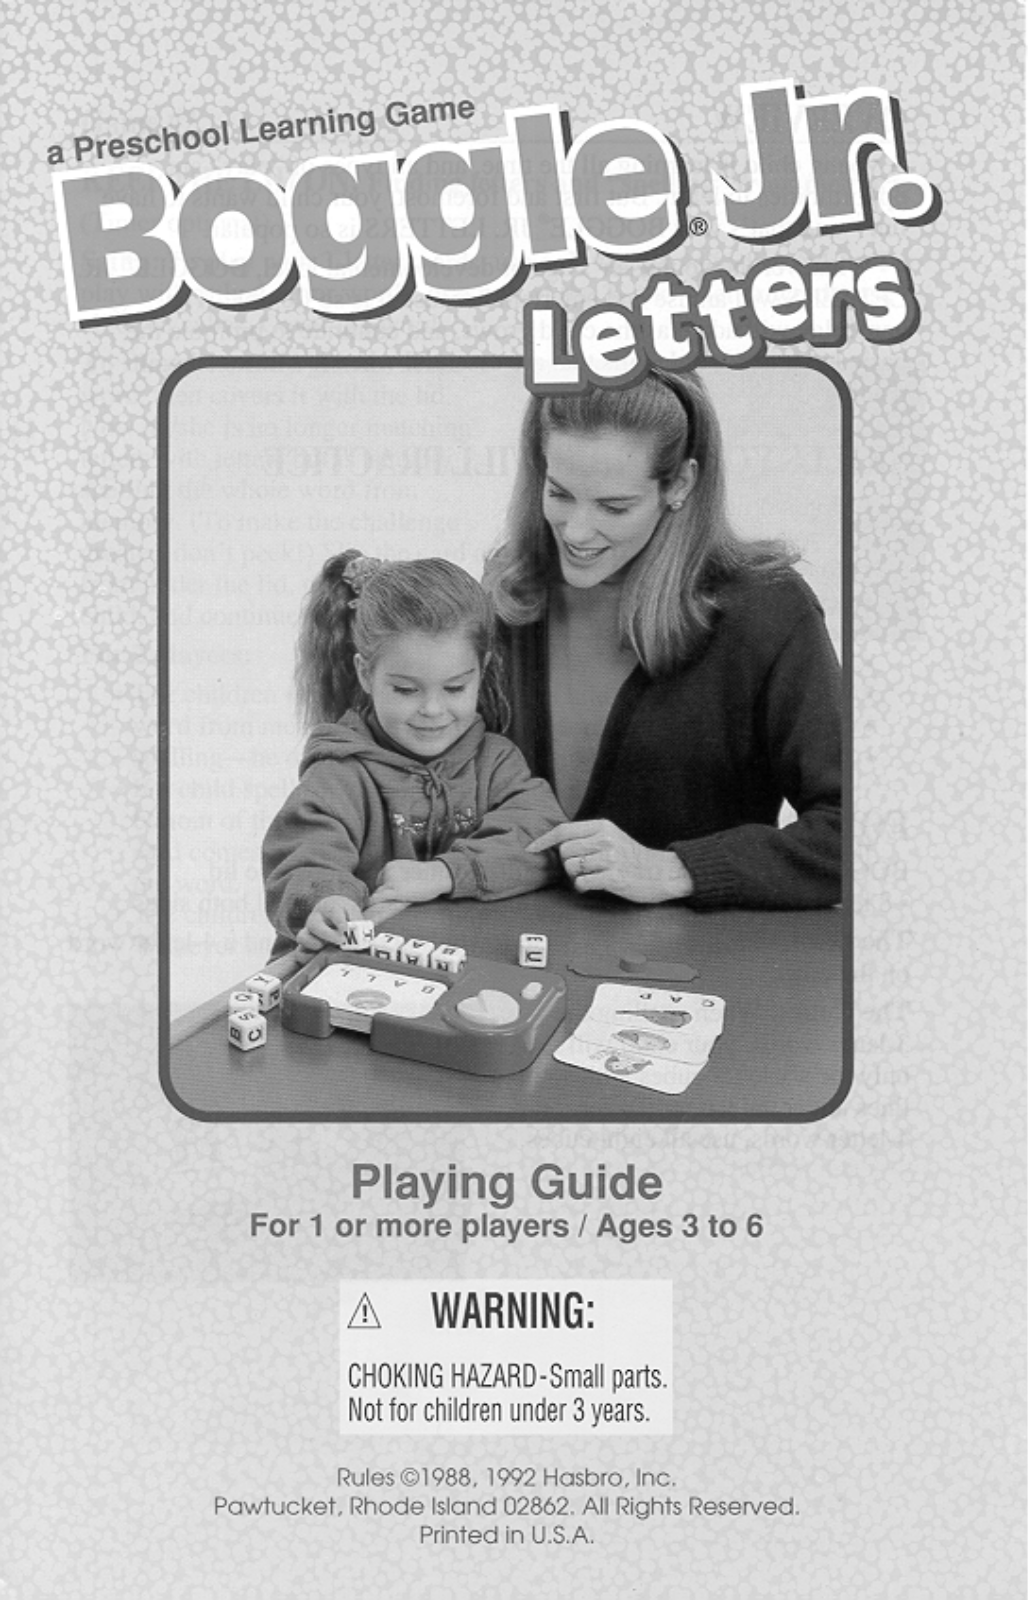 HASBRO Boggle Jr. Letters User Manual